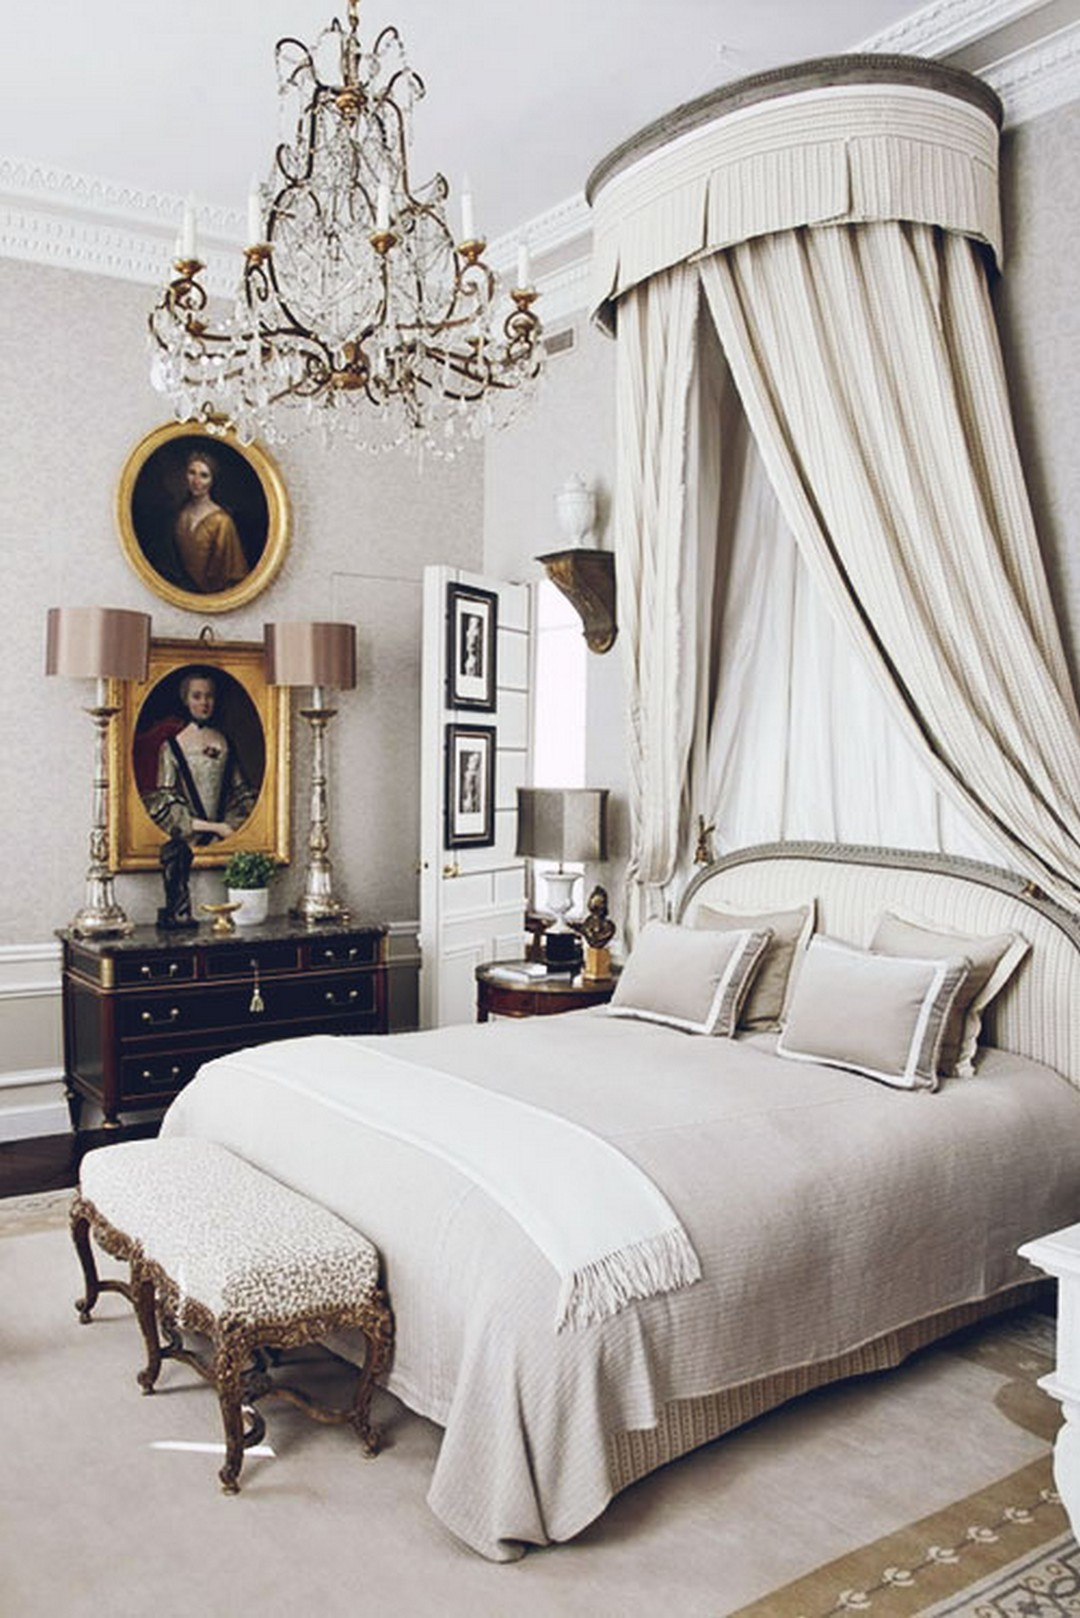 Parisian Bedroom Decorating Ideas
 29 Luxurious Parisian Style Home Decor The Master of